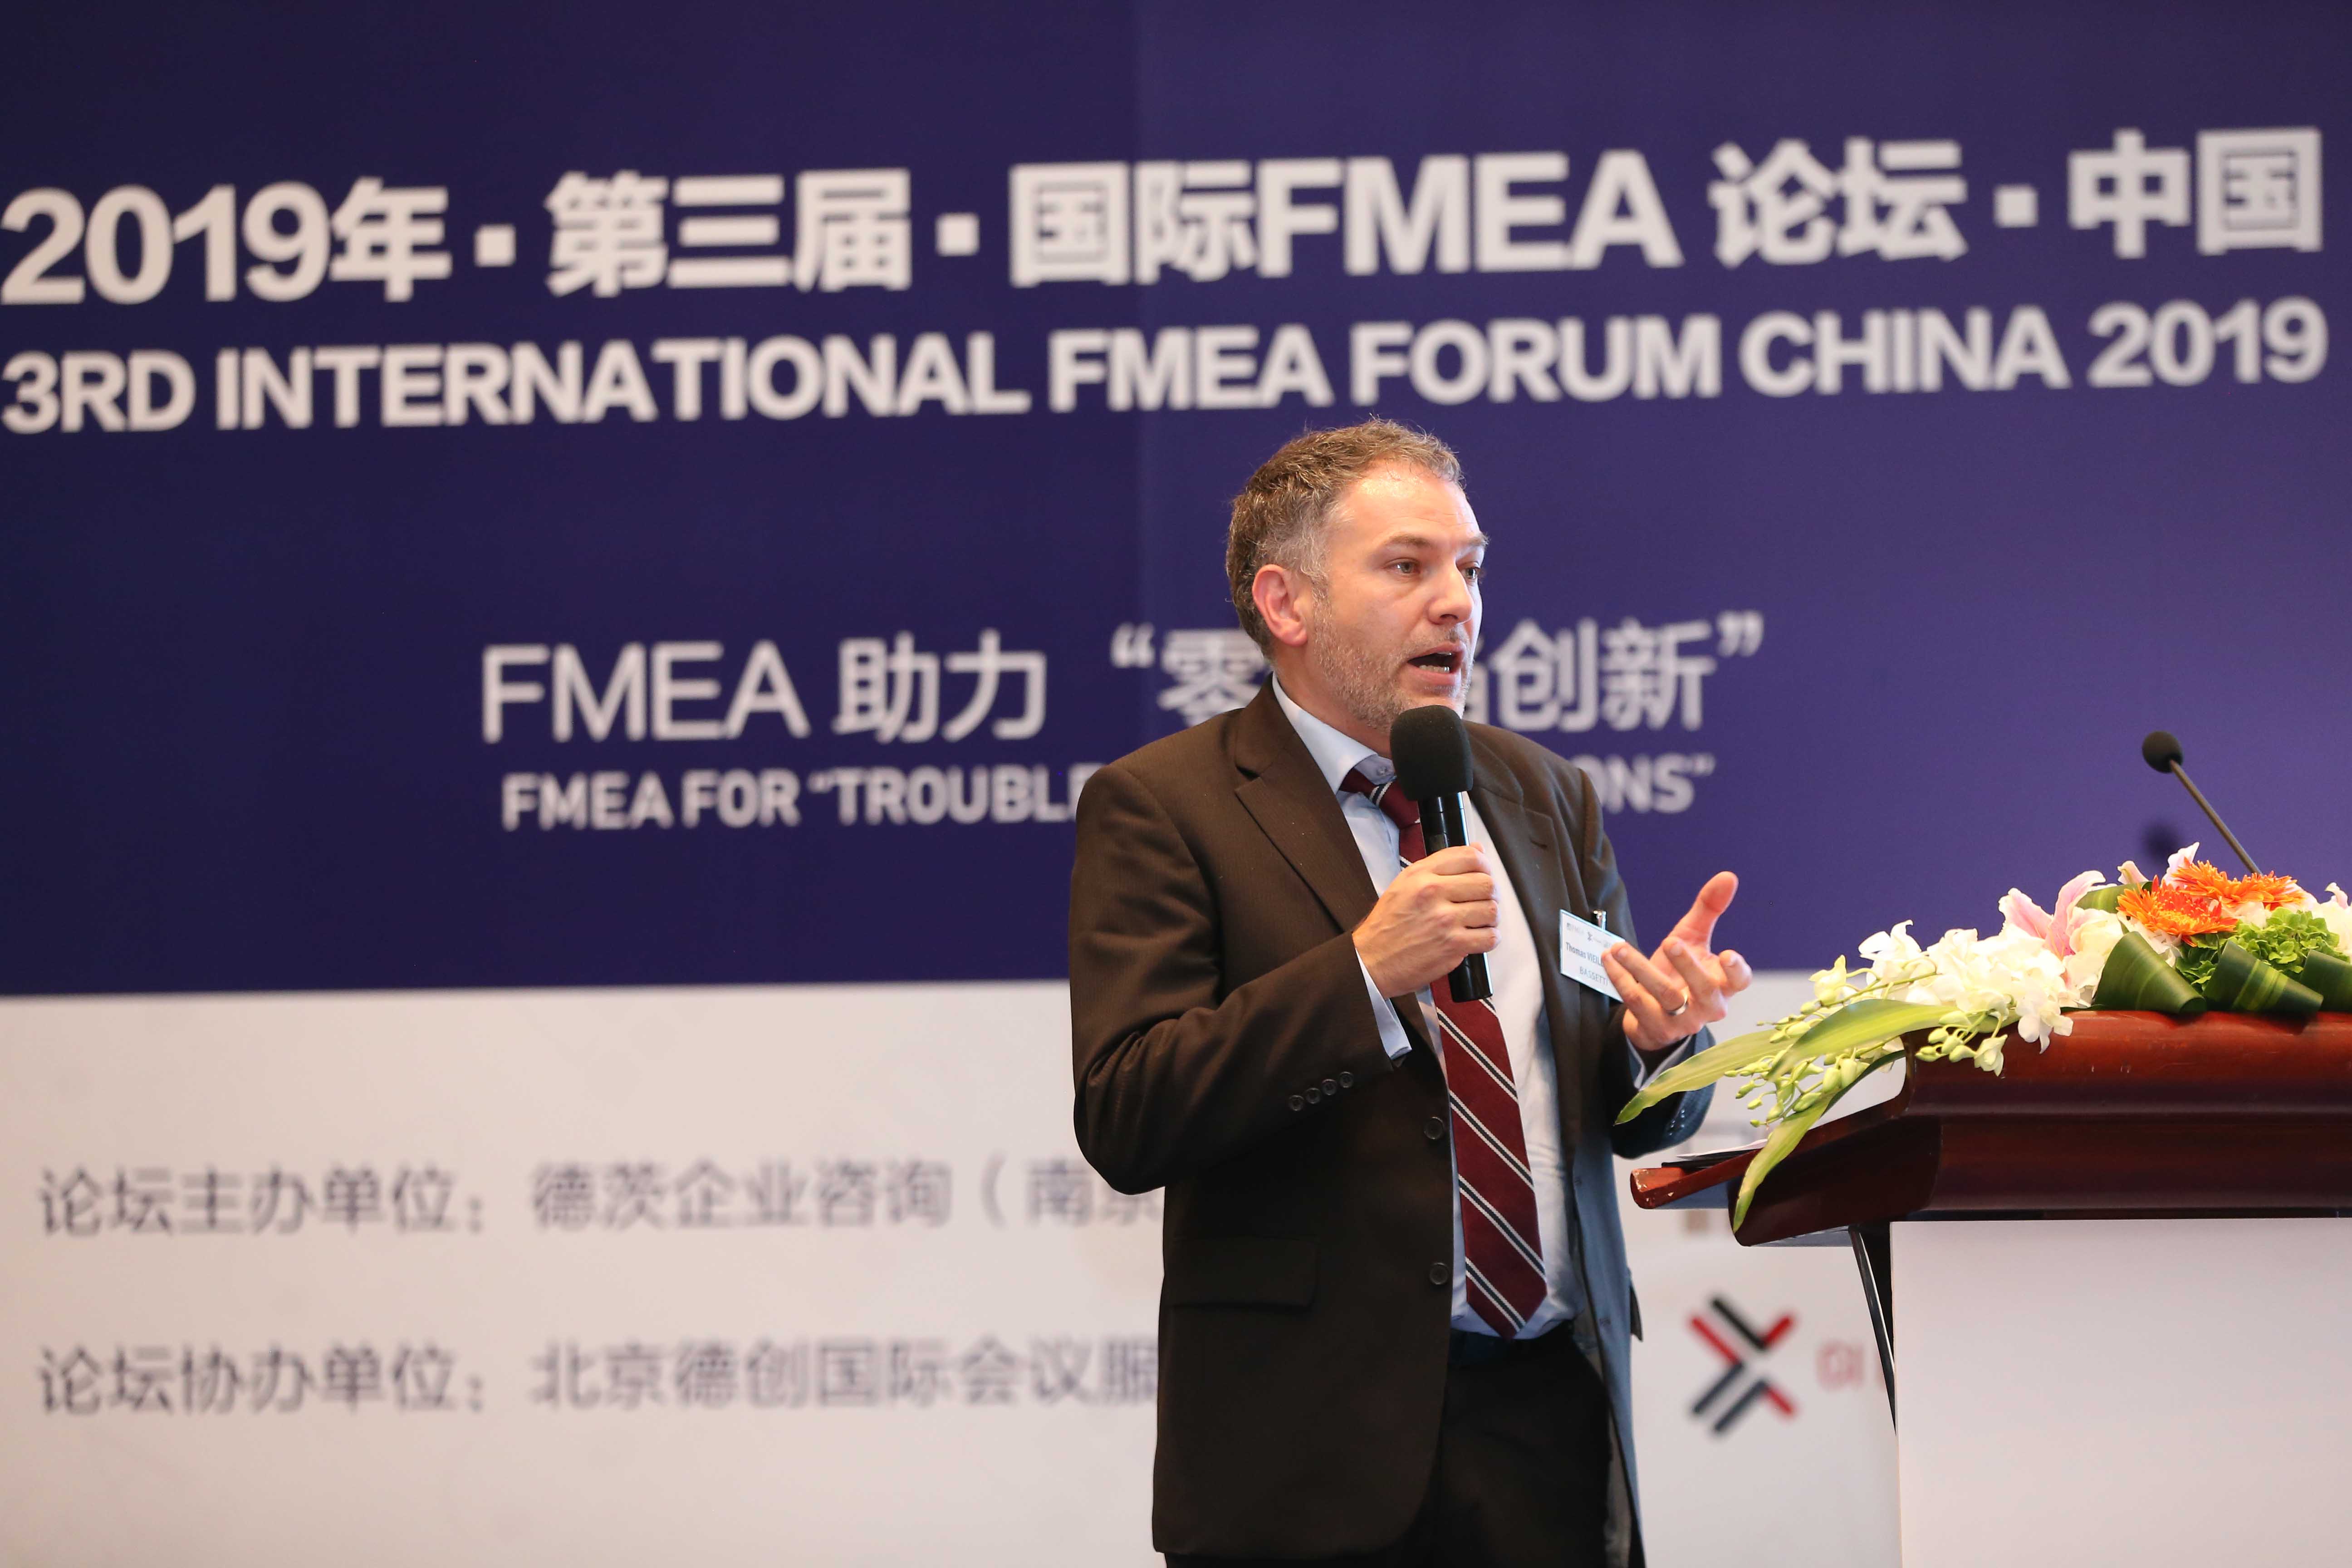 International FMEA FORUM 2019